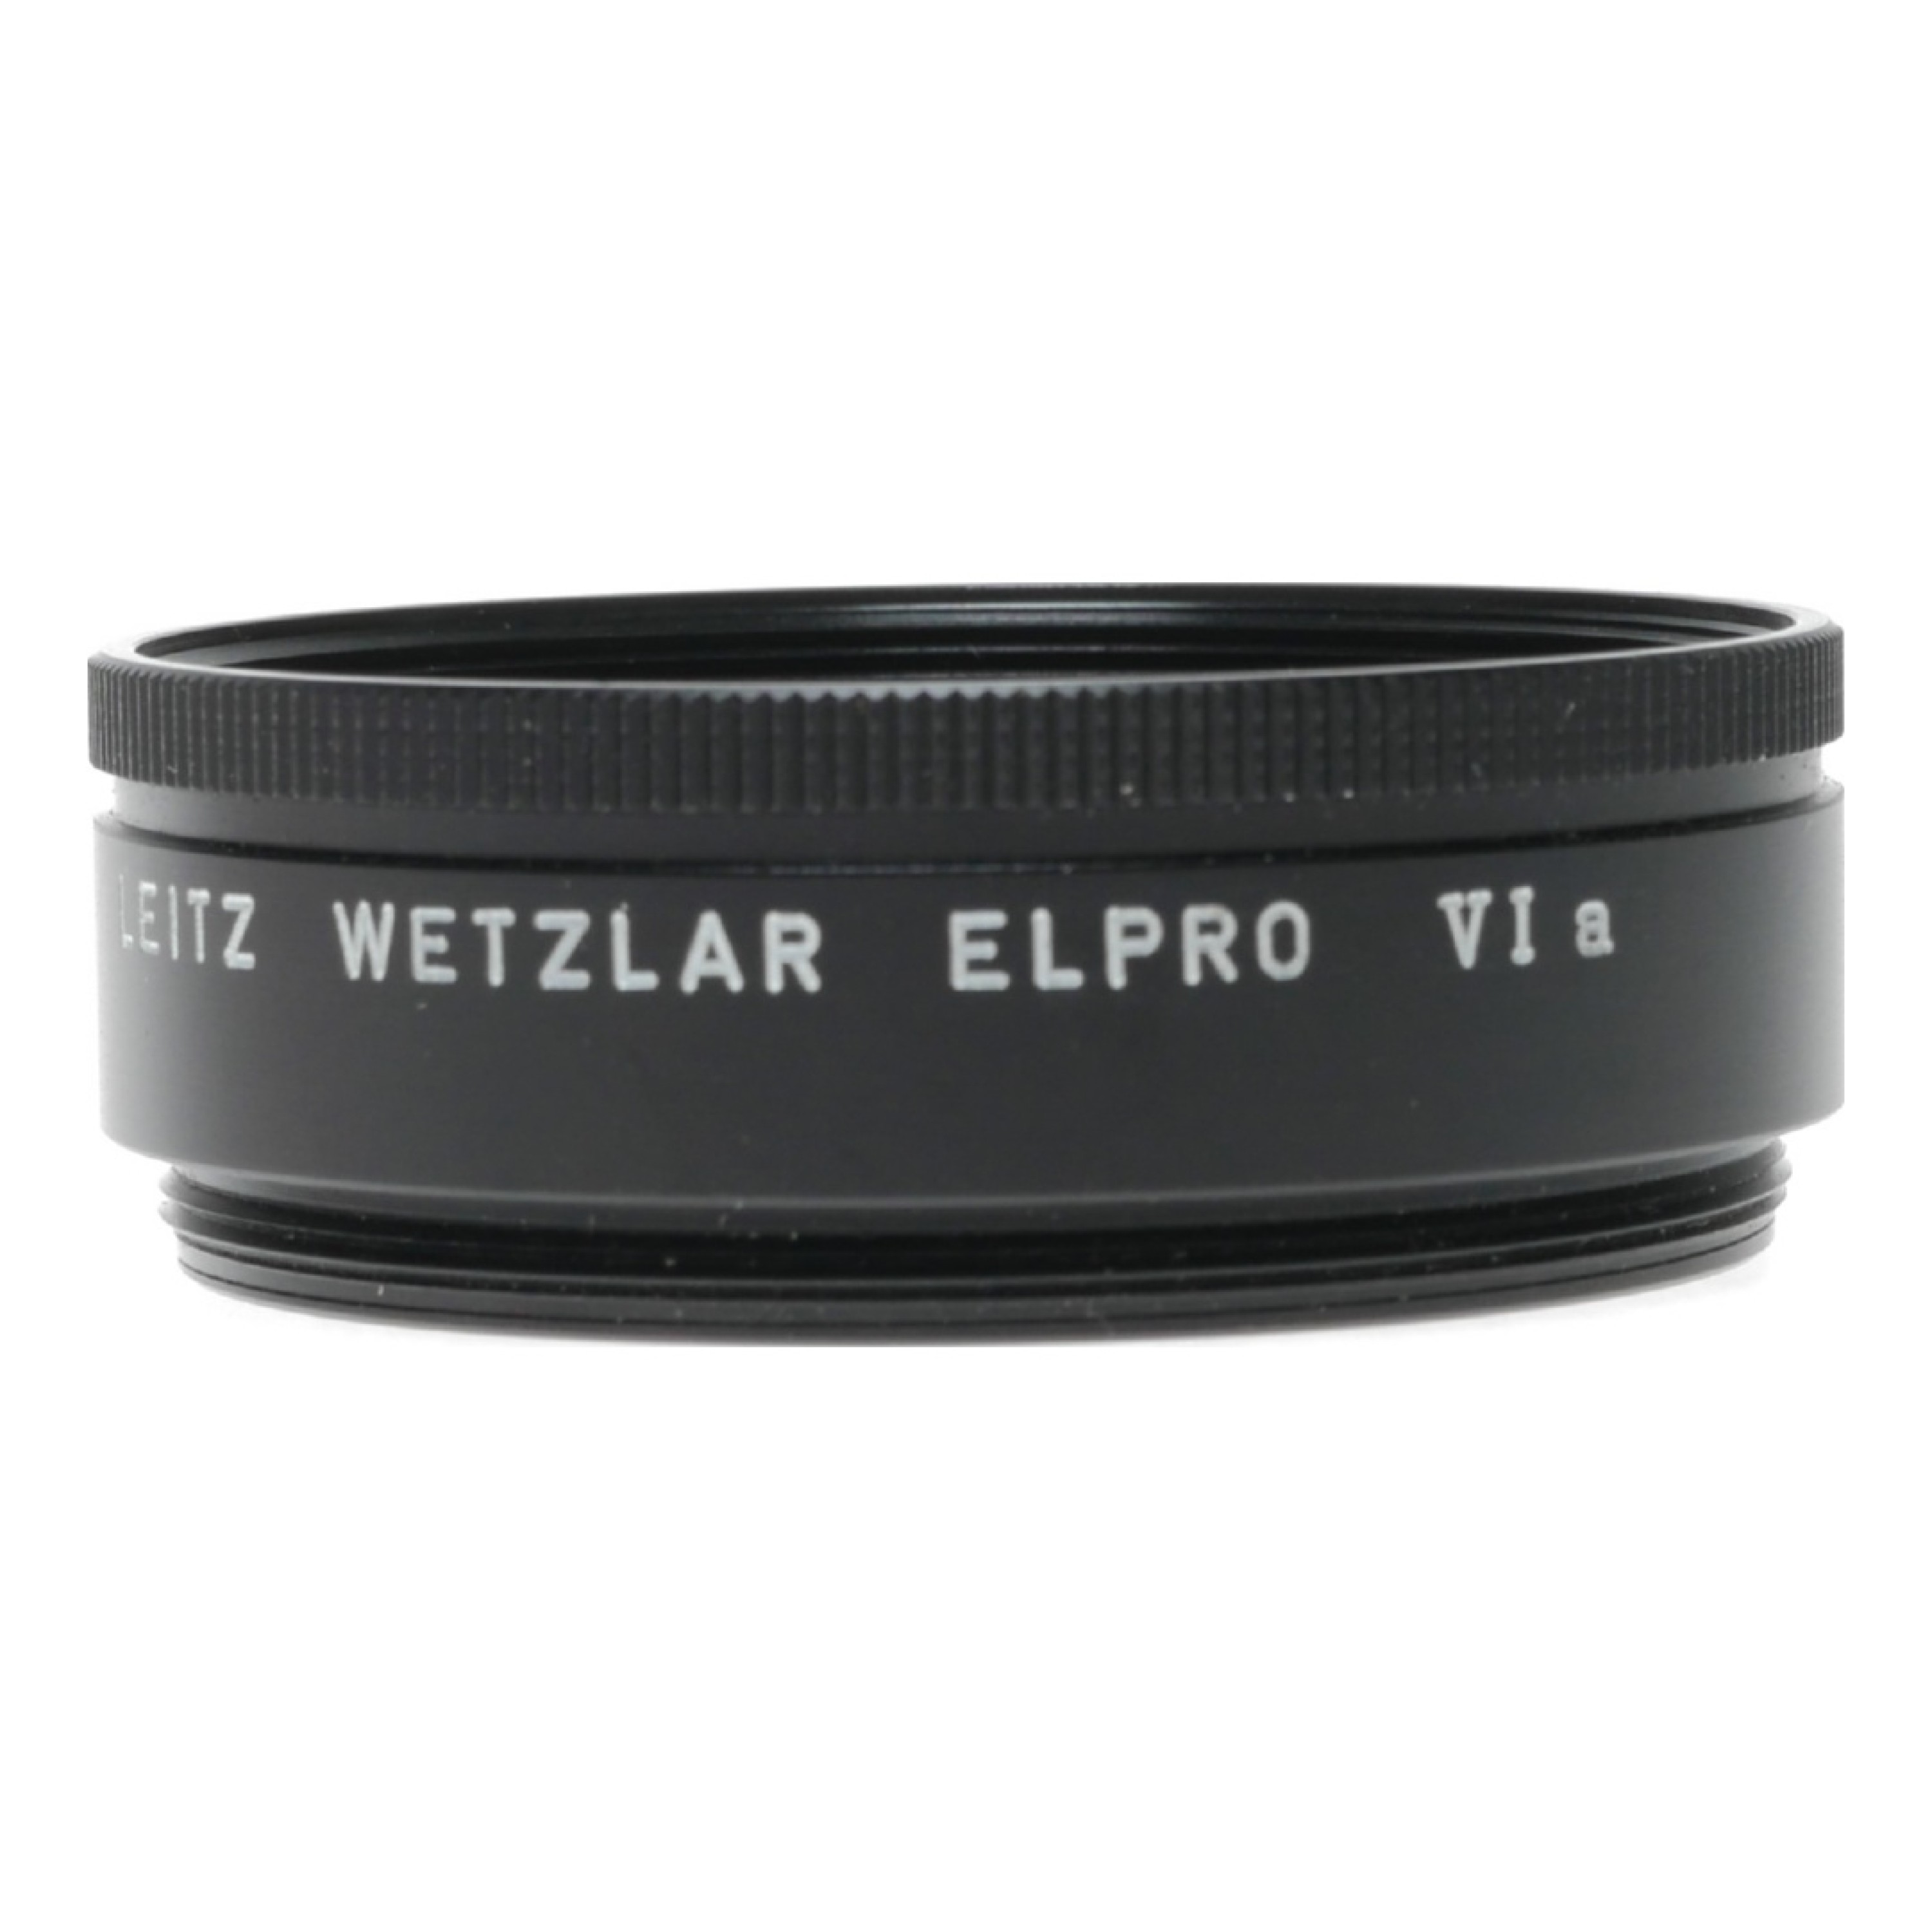 Leica Leitz Elpro VIa 16531 Close Up Lens Boxed 